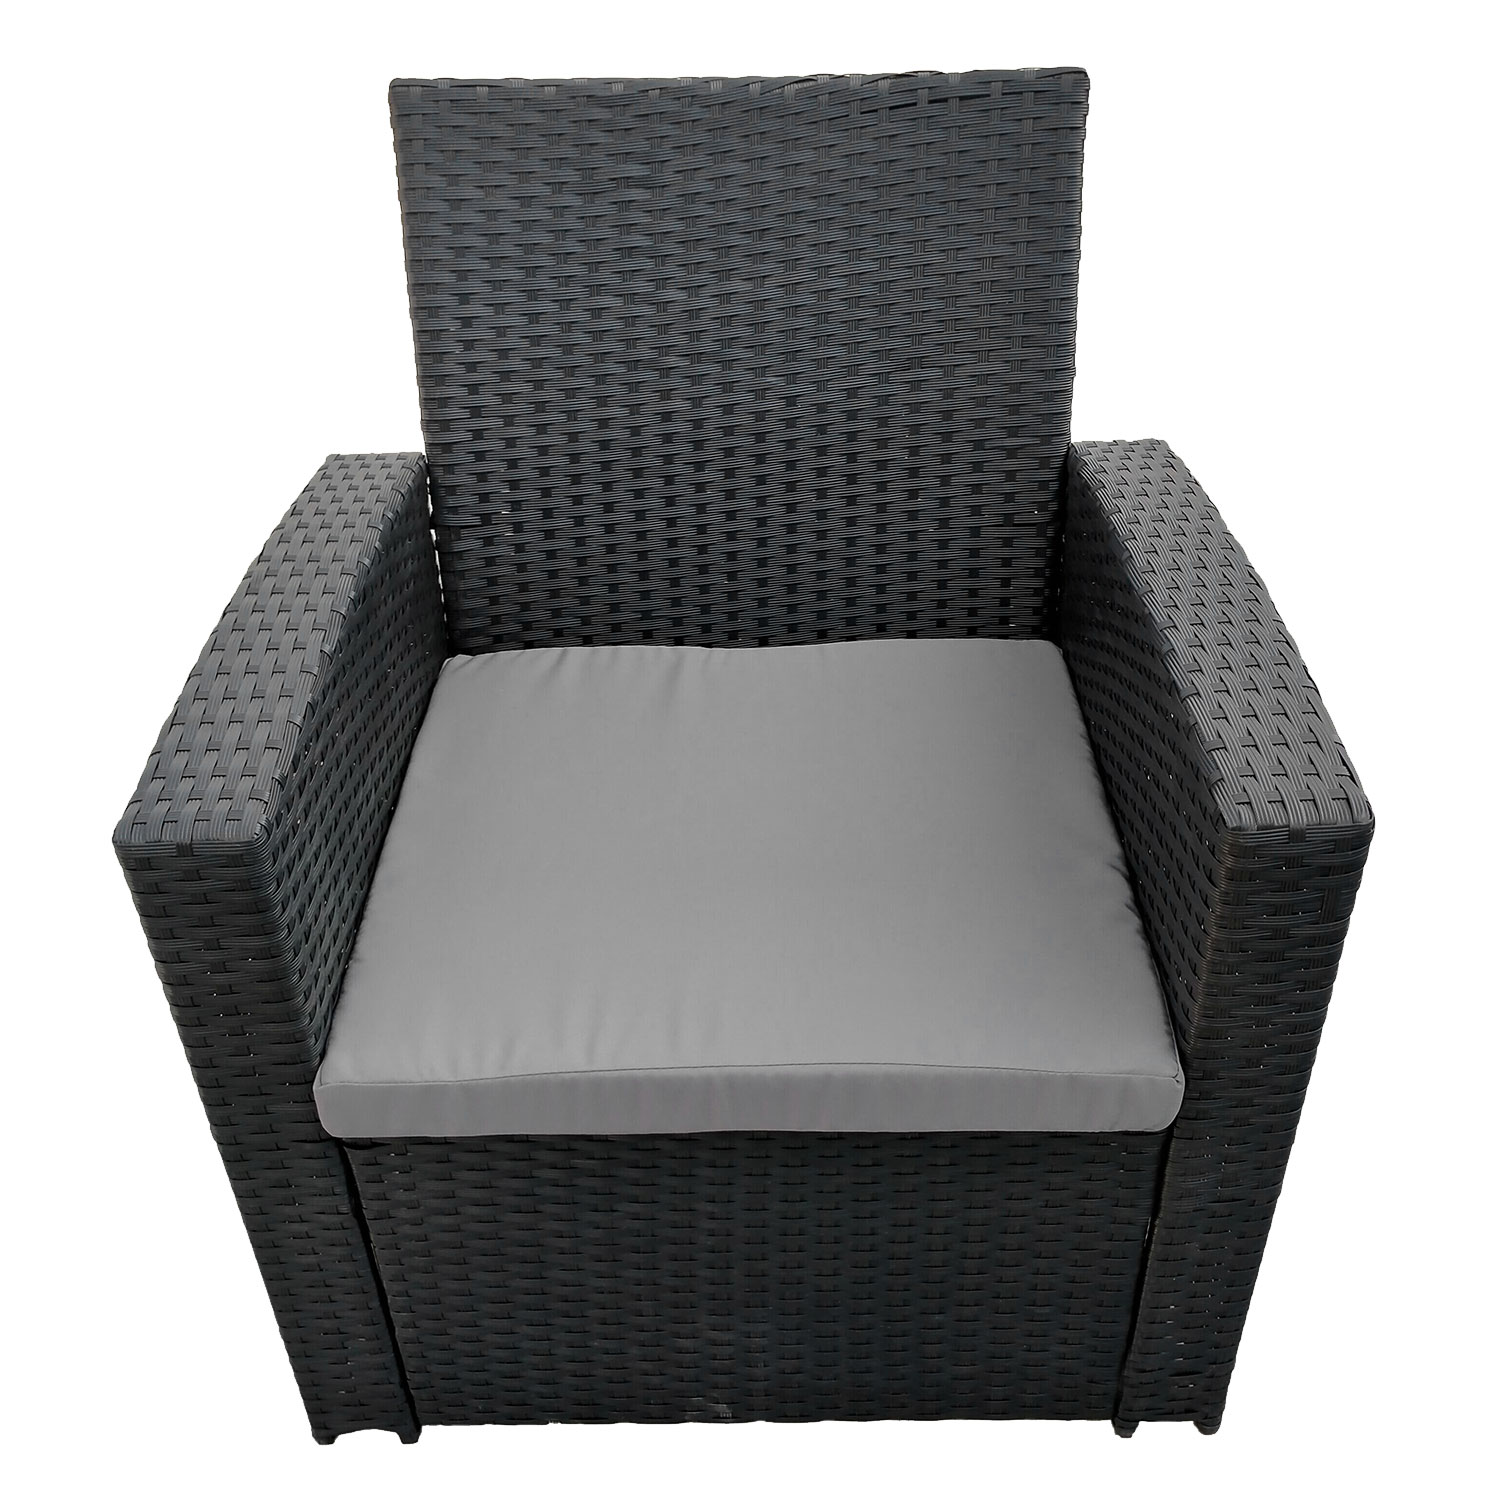 Gartenmöbel COMINO aus schwarzem Harzgeflecht, 4 Sitze - graue Kissen